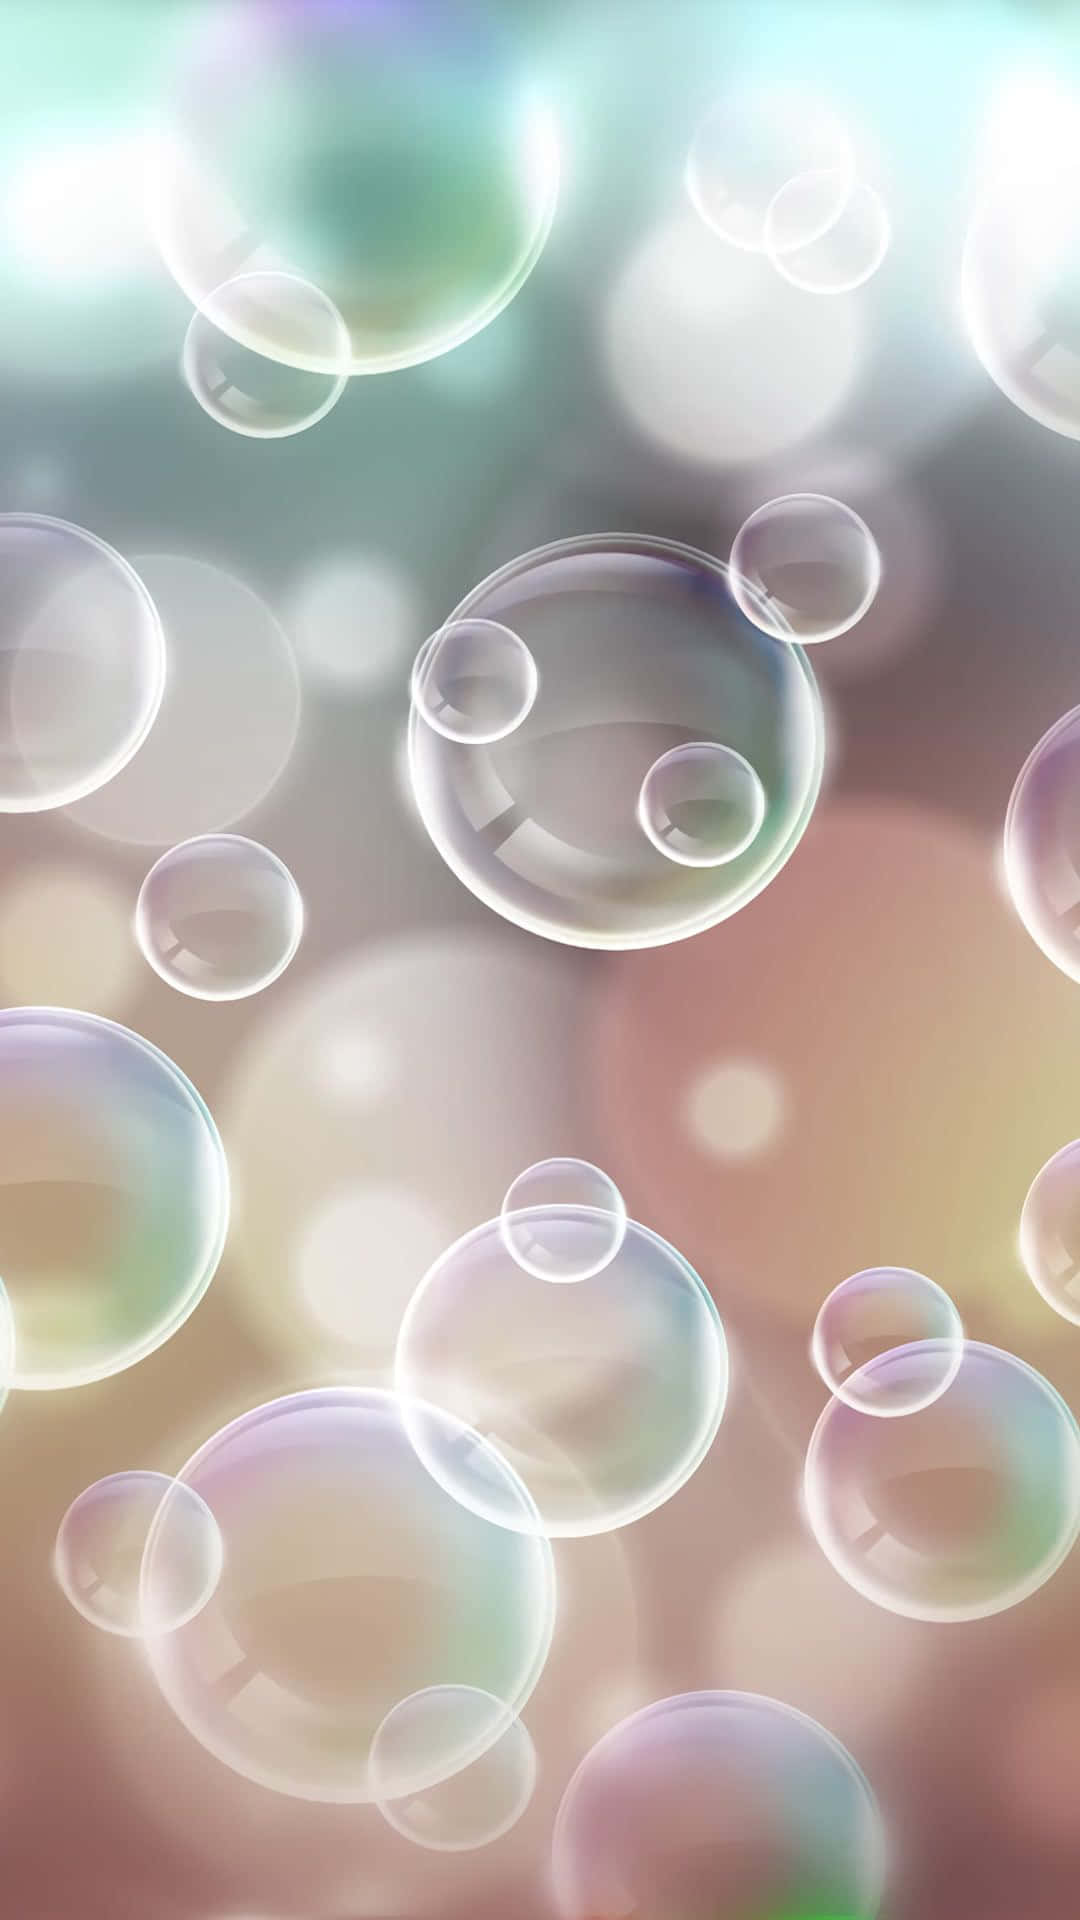 Details 52+ bubbles wallpaper iphone best - in.cdgdbentre